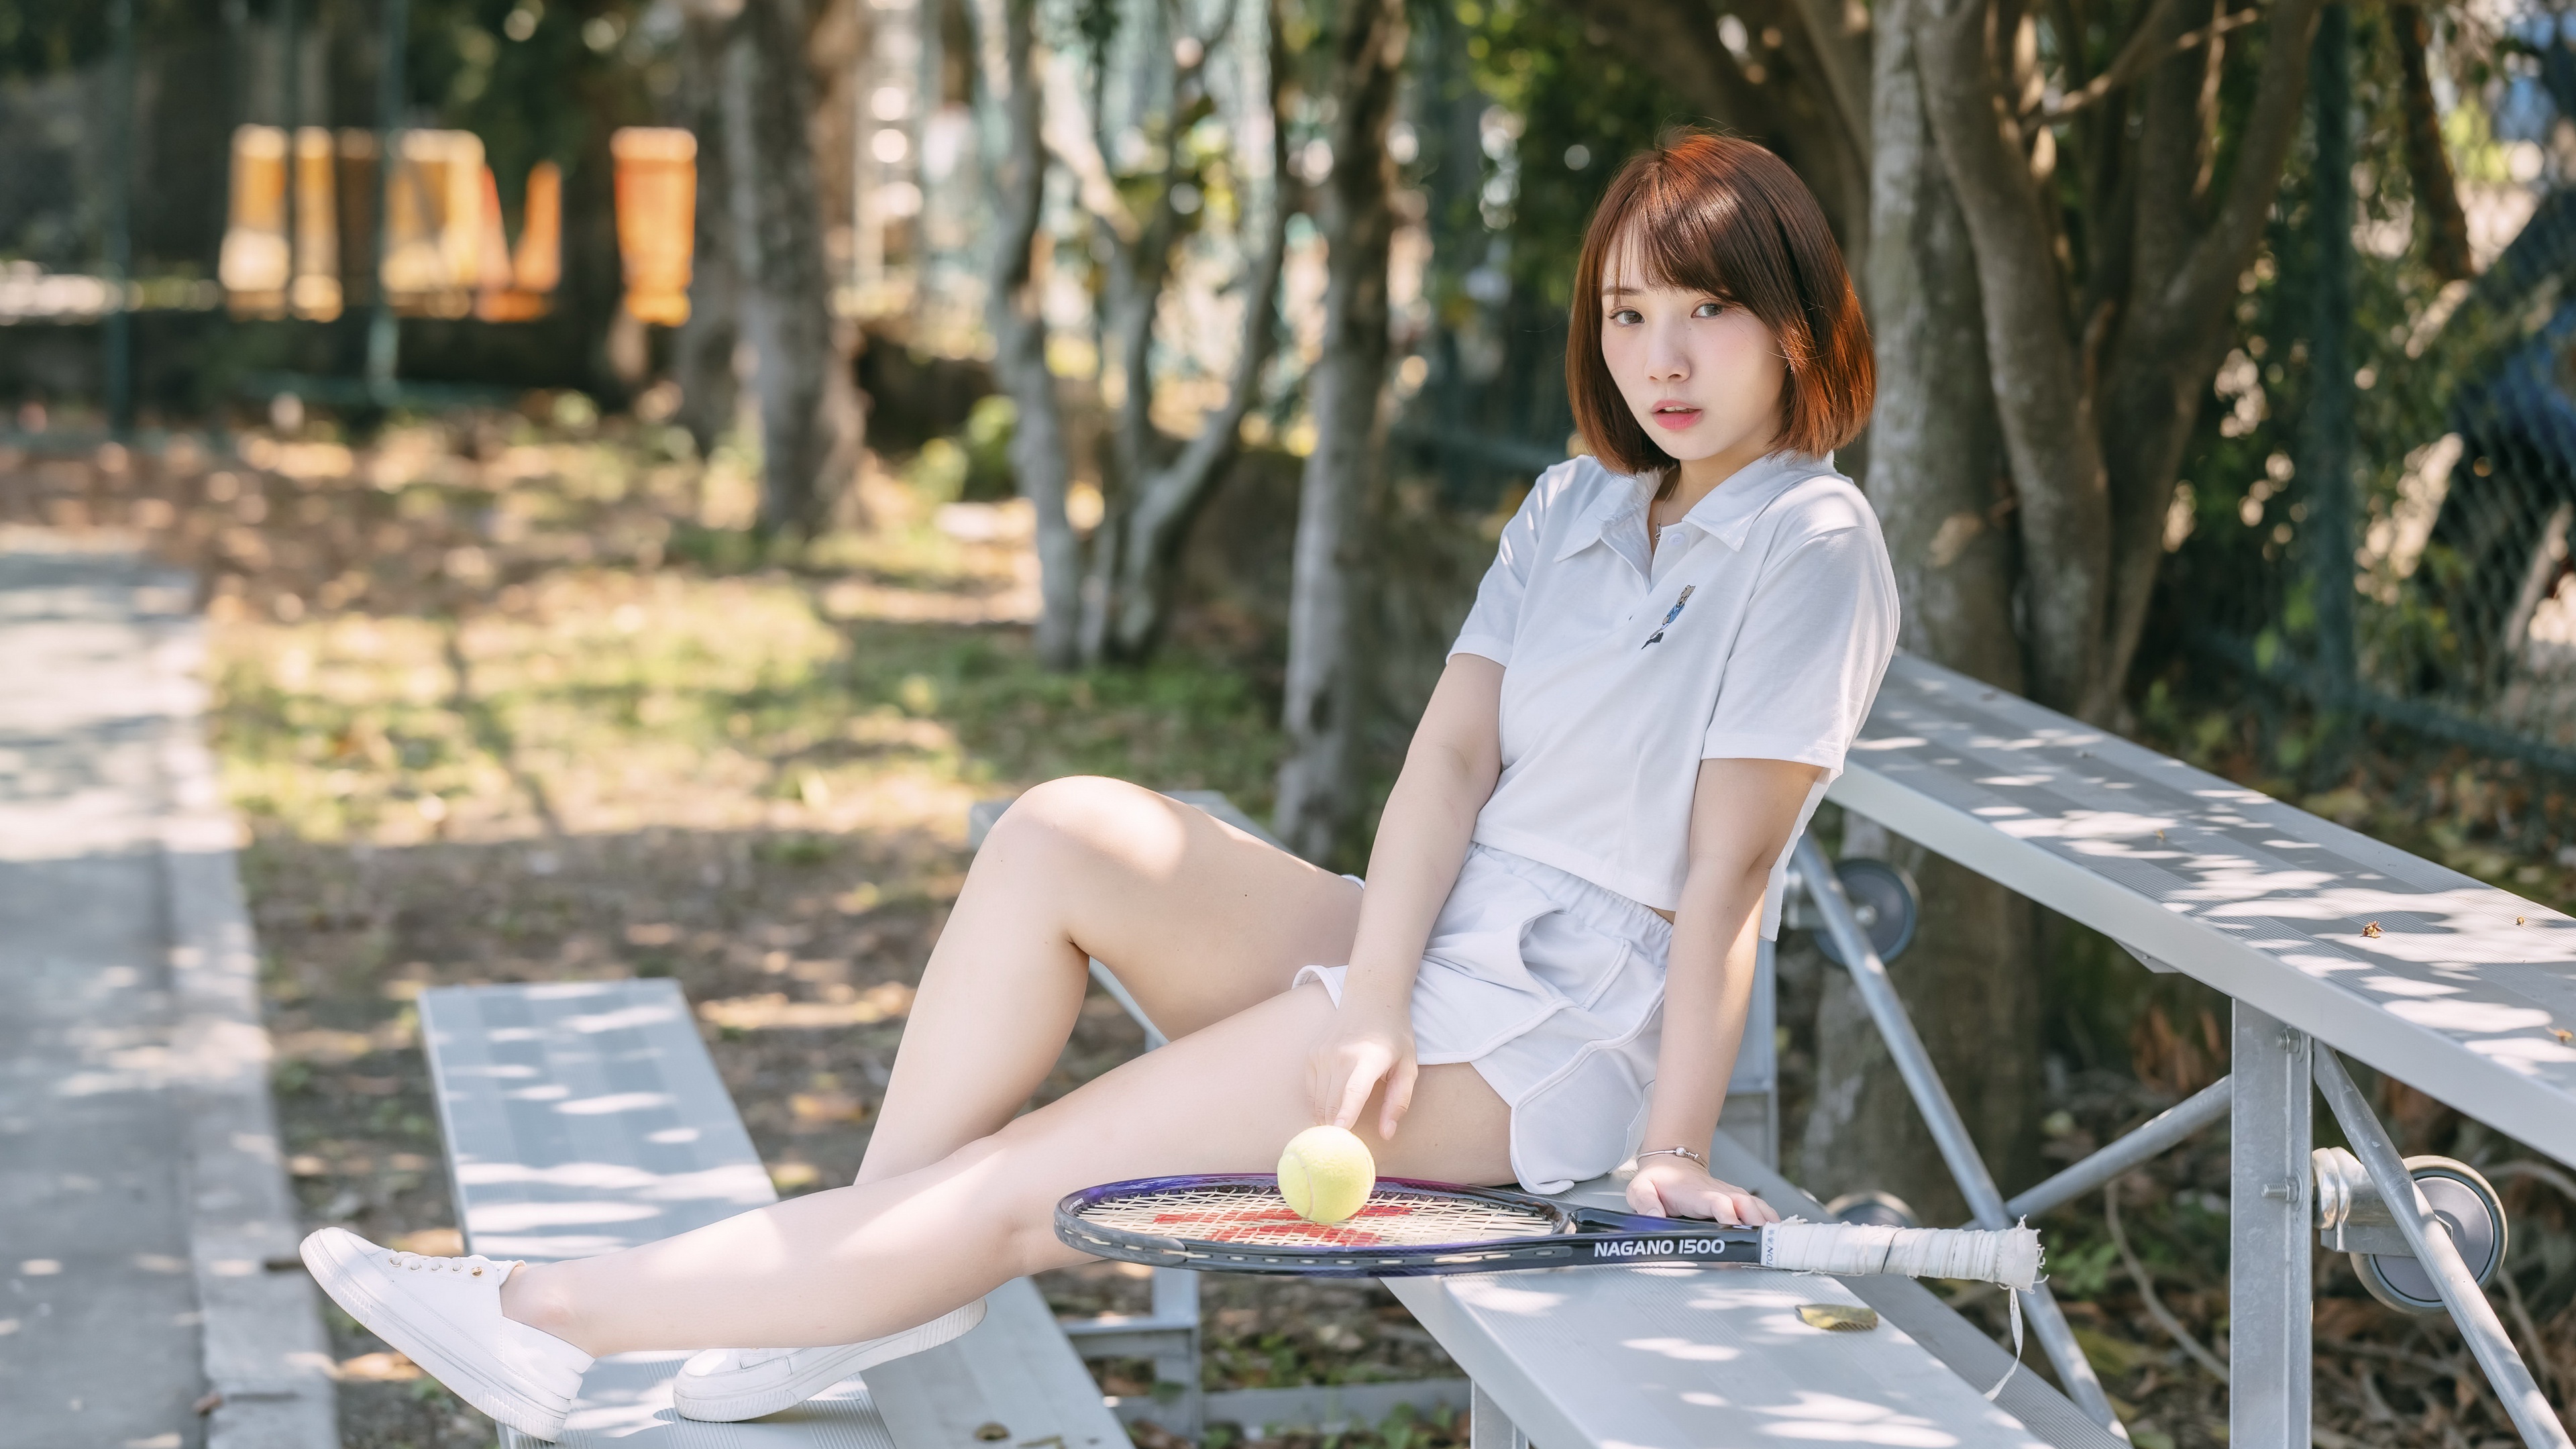 Asian Model Women Tennis Rackets Tennis Balls Legs White Shoes Dyed Hair Shoulder Length Hair Shorts 3840x2160